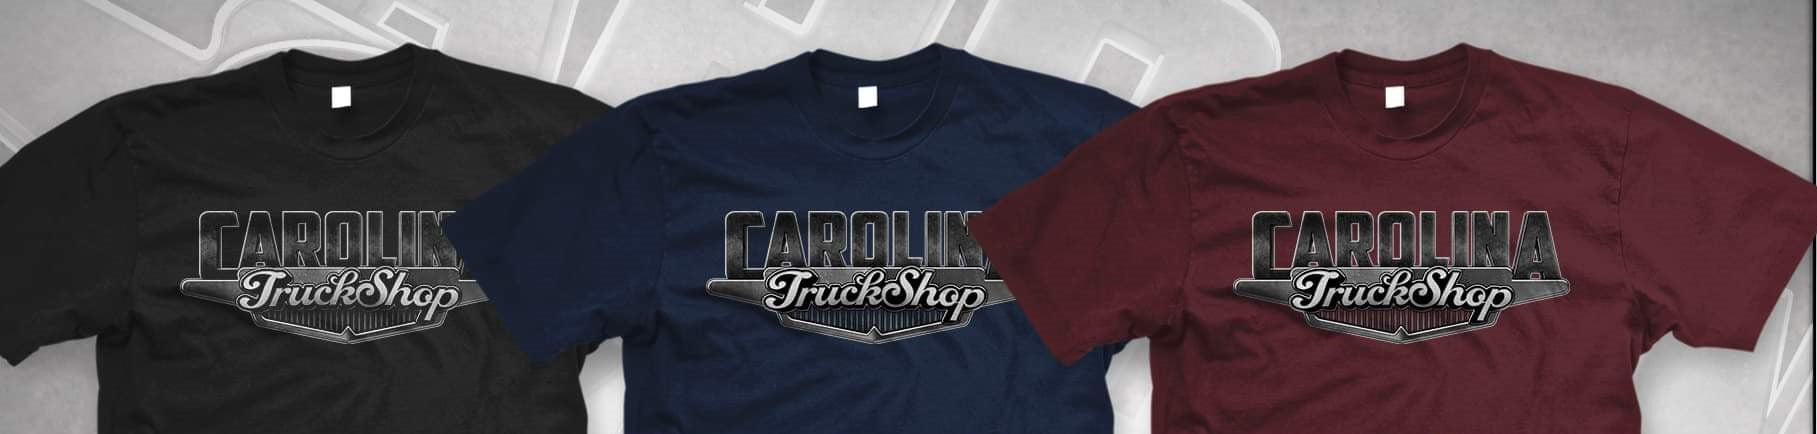 Carolina Truck Shop T-Shirt